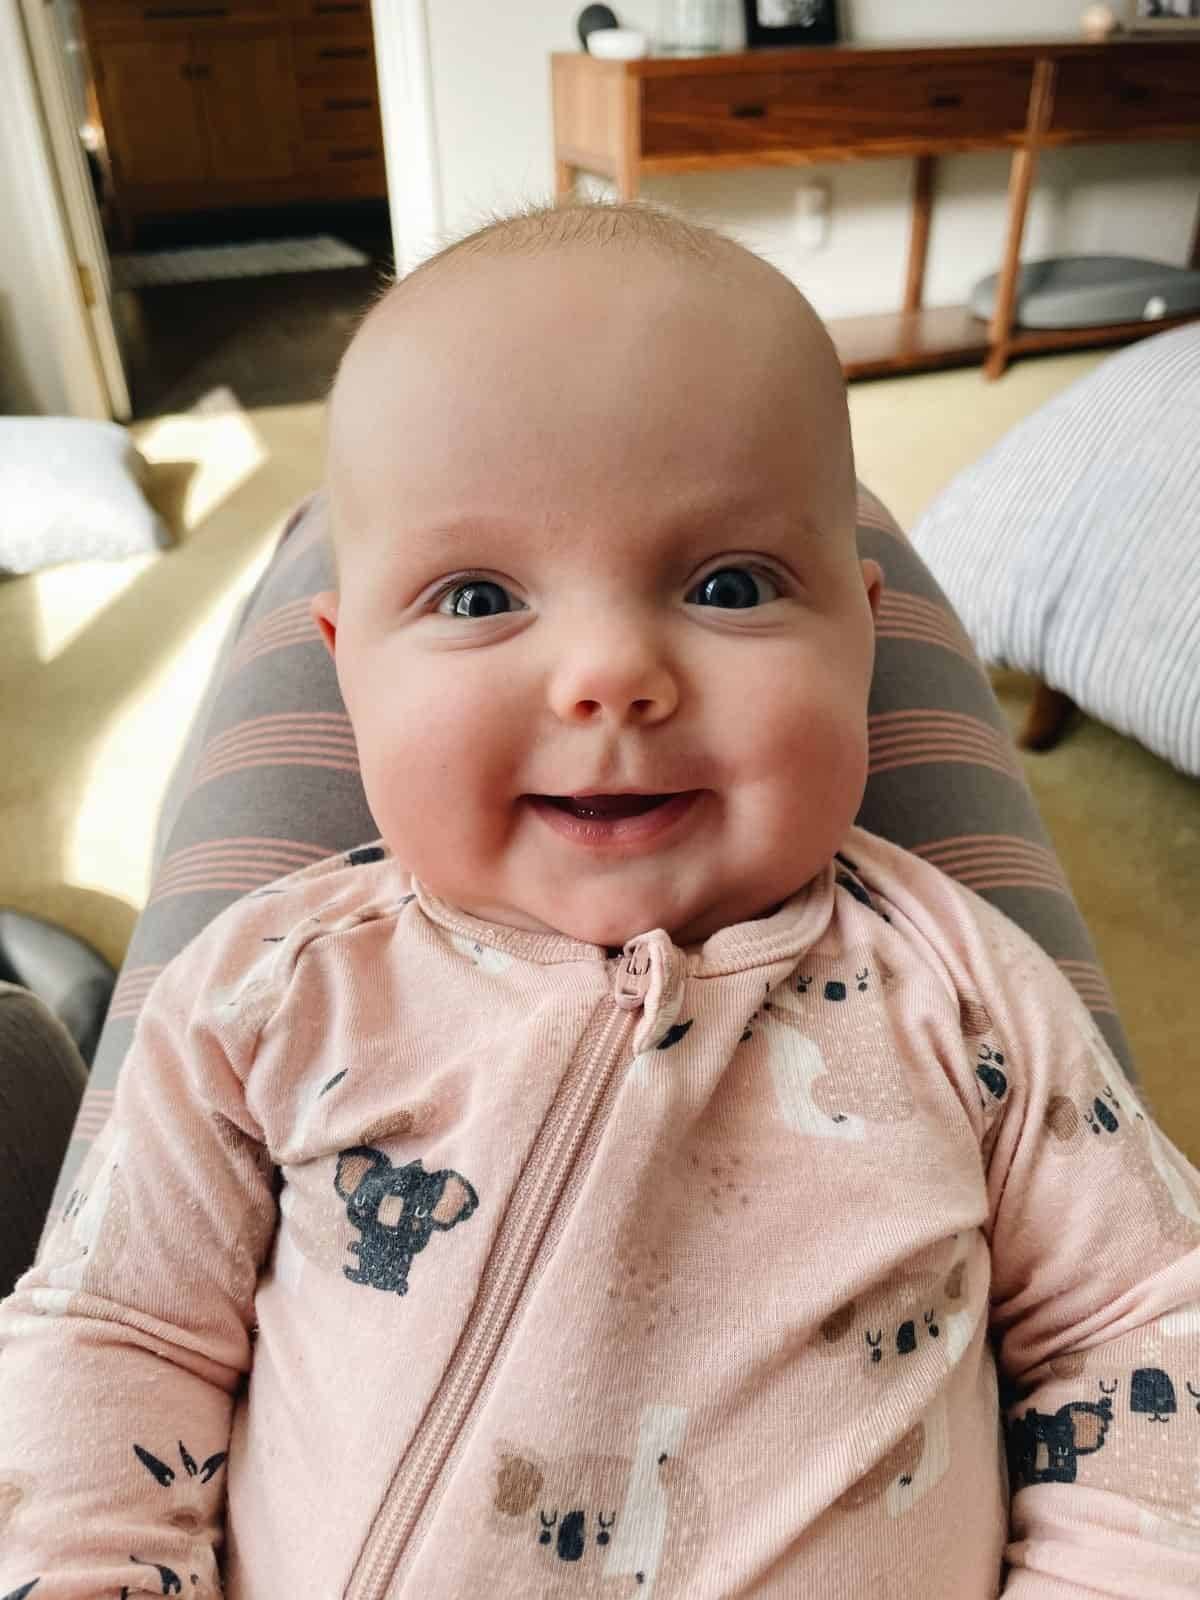 Smiling baby